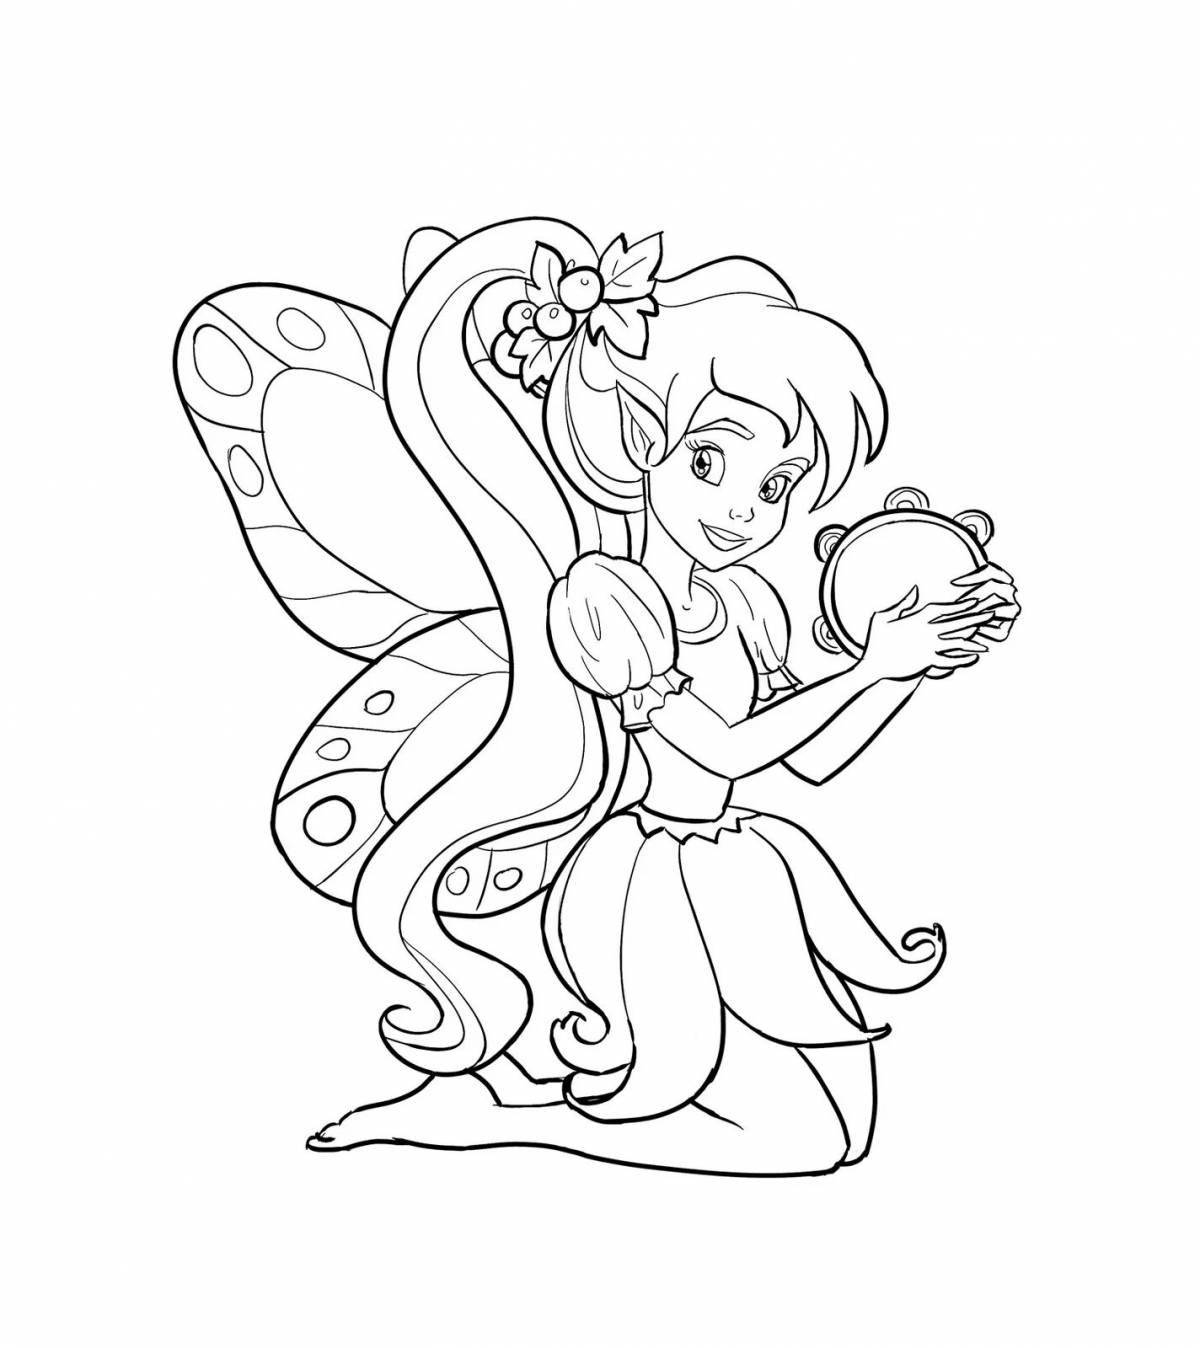 Fairy princess coloring page